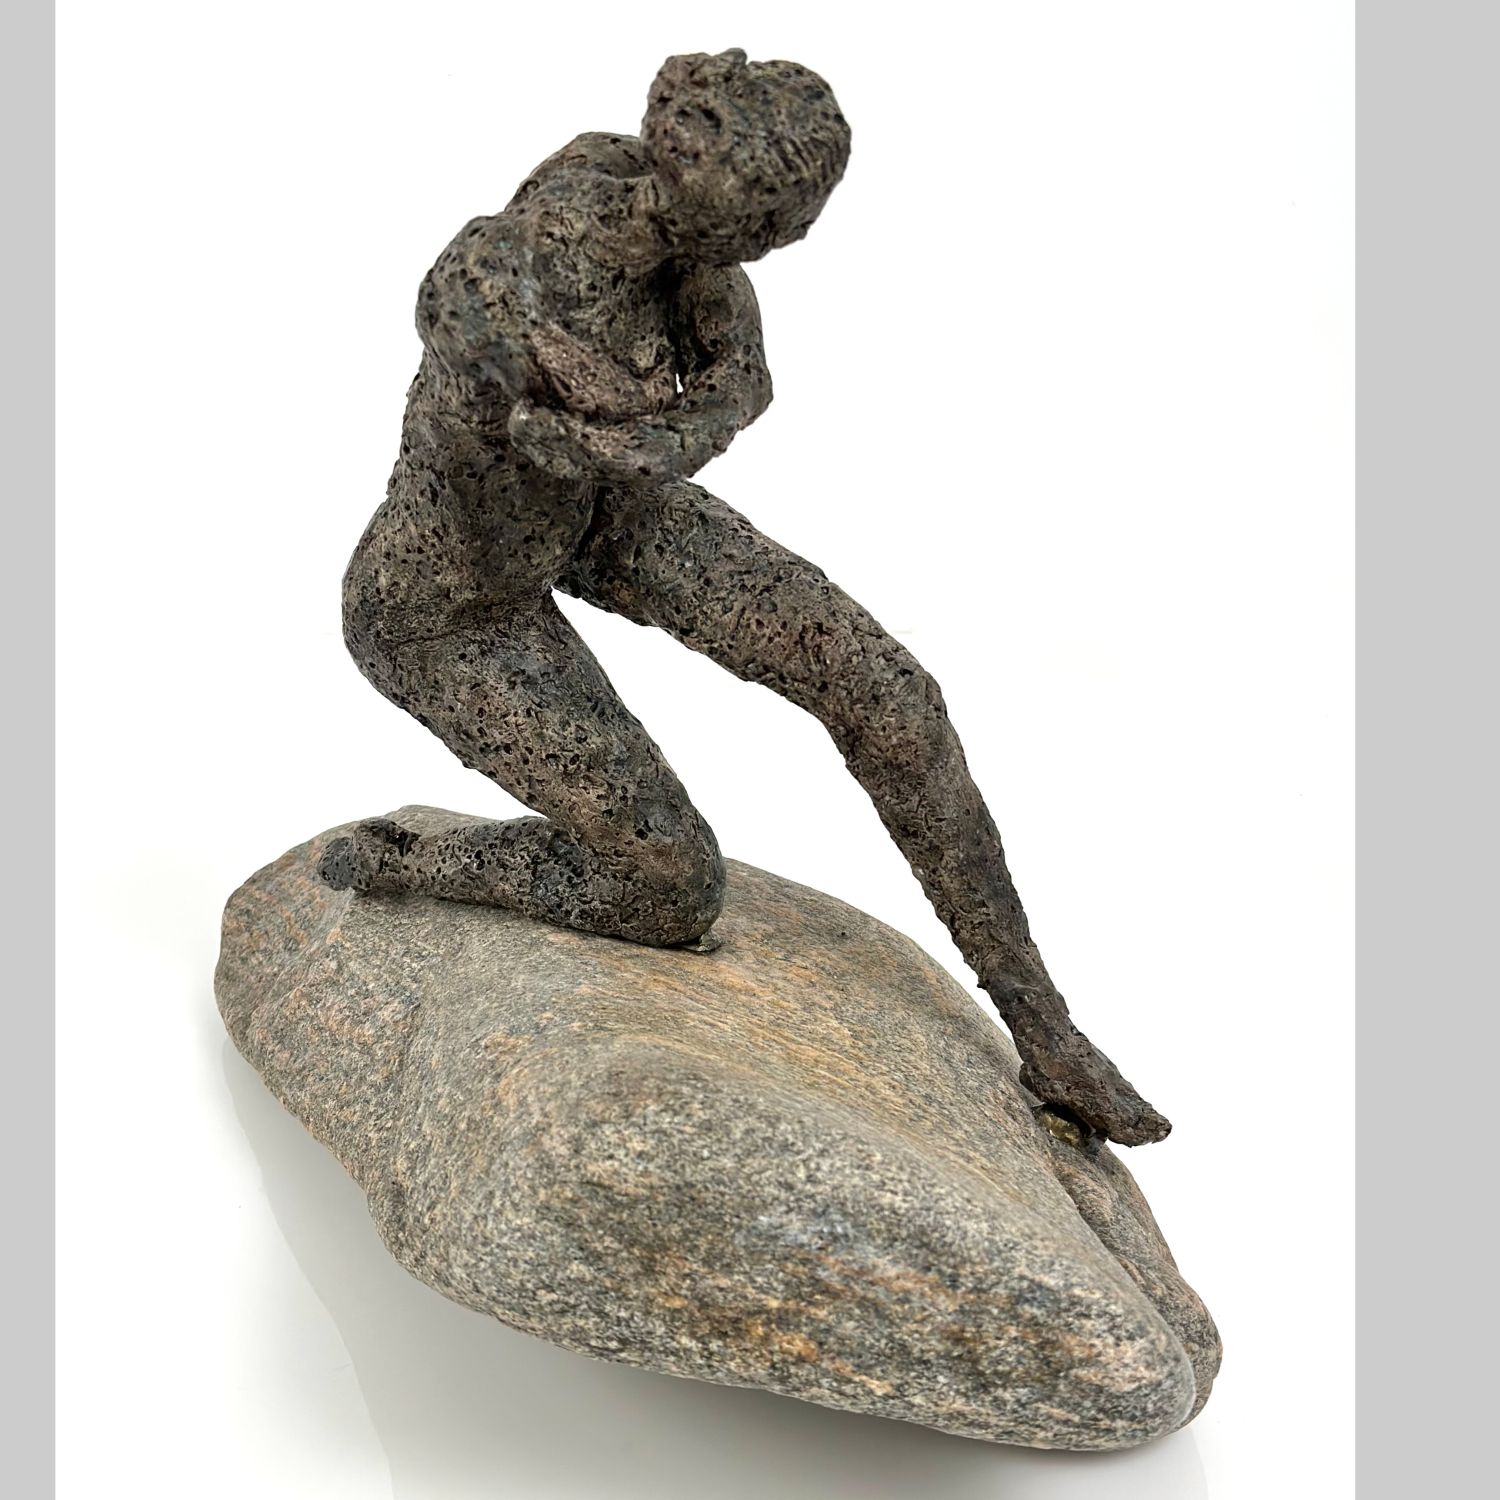 Catharina Goldnau: Kneeling Female on a Rock Product Image 4 of 4